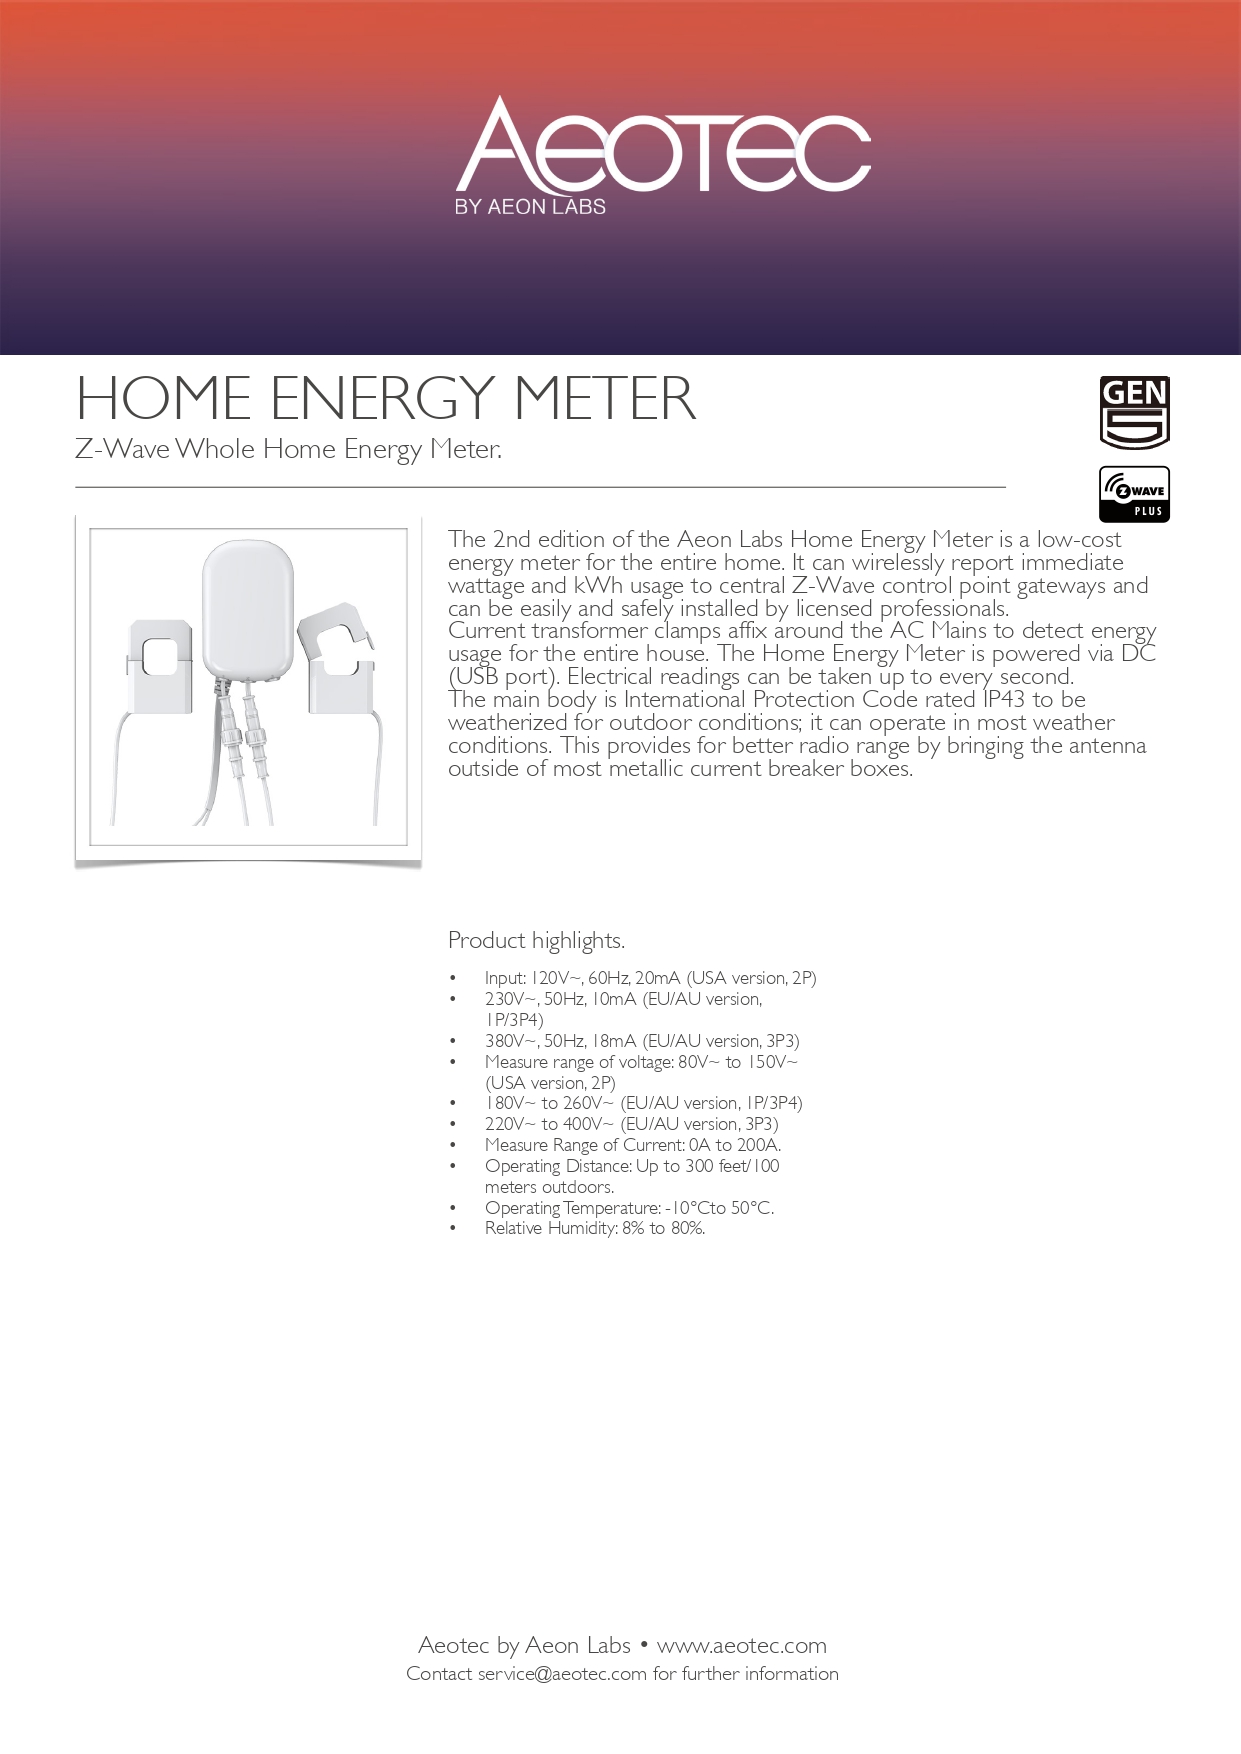 Aeotec Home Energy Meter 3-Clamp (60A) Gen5